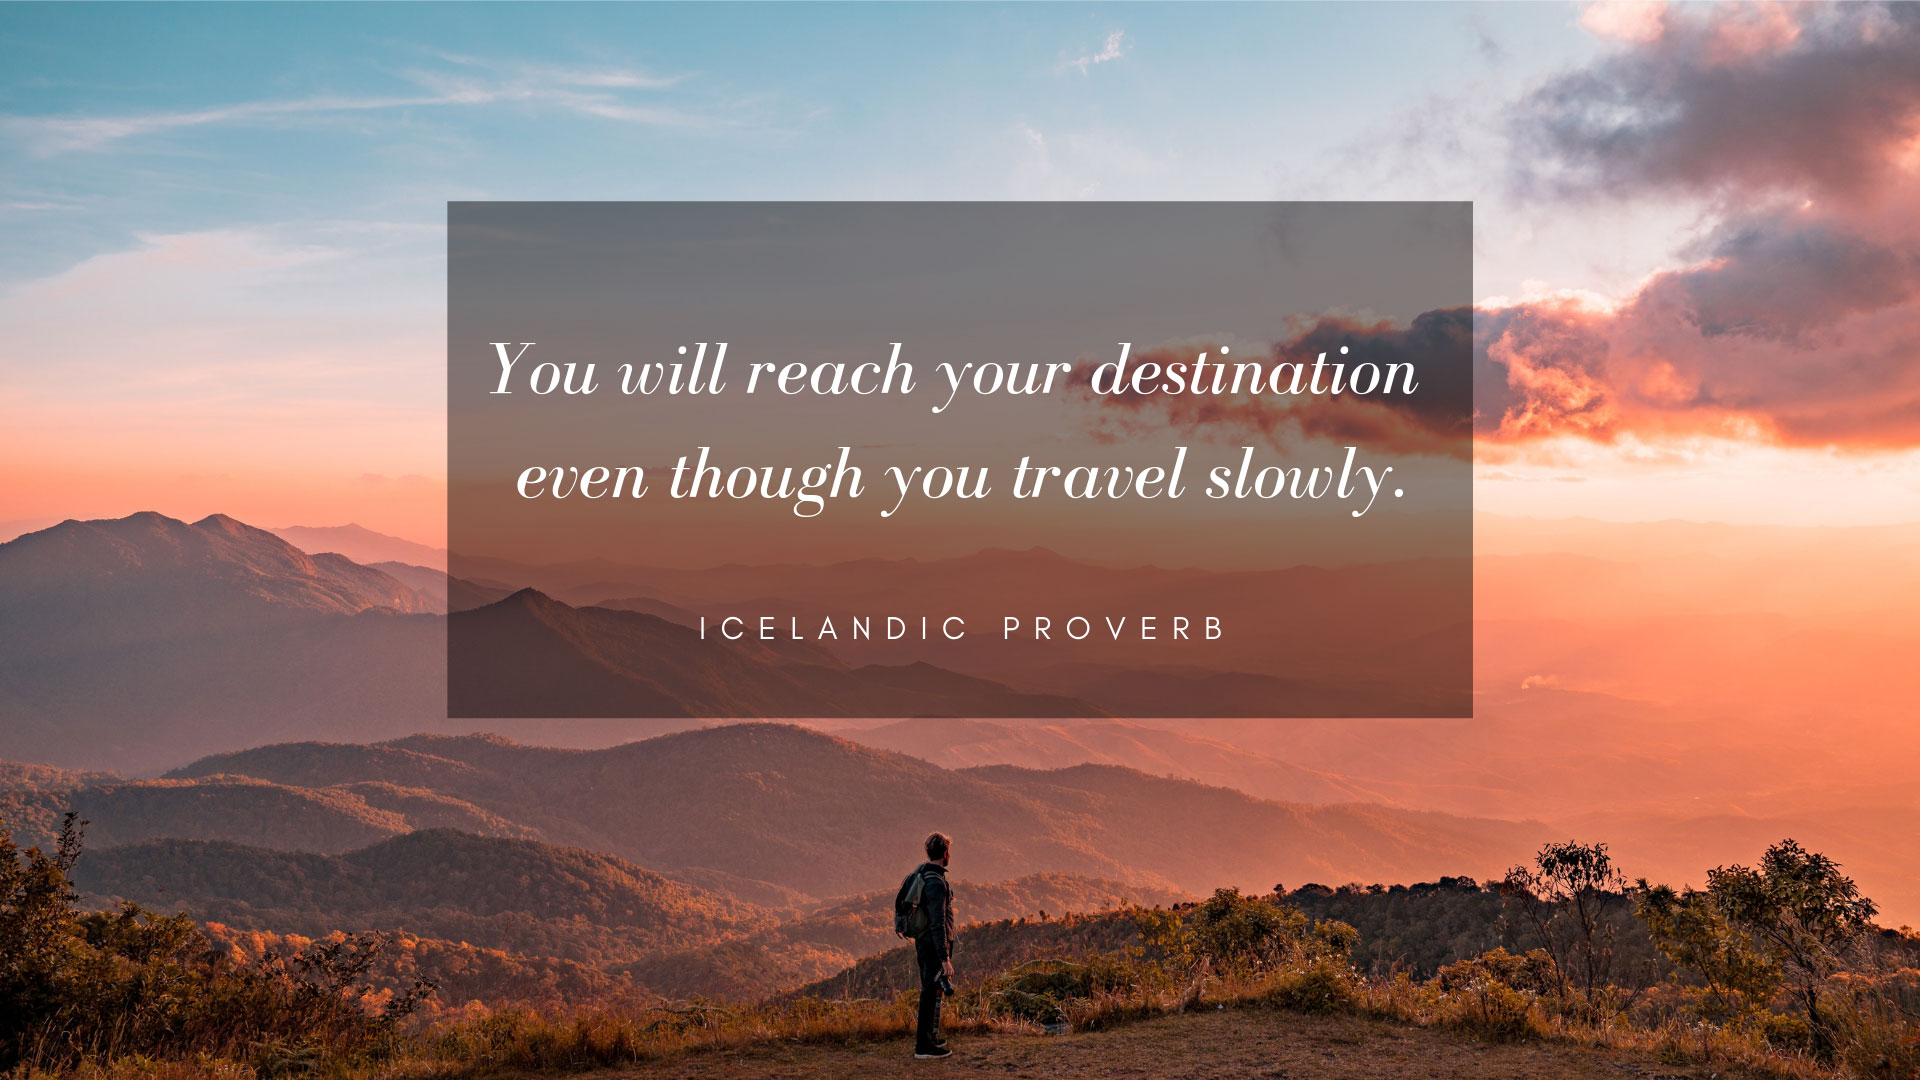 Inspiring travel quotes